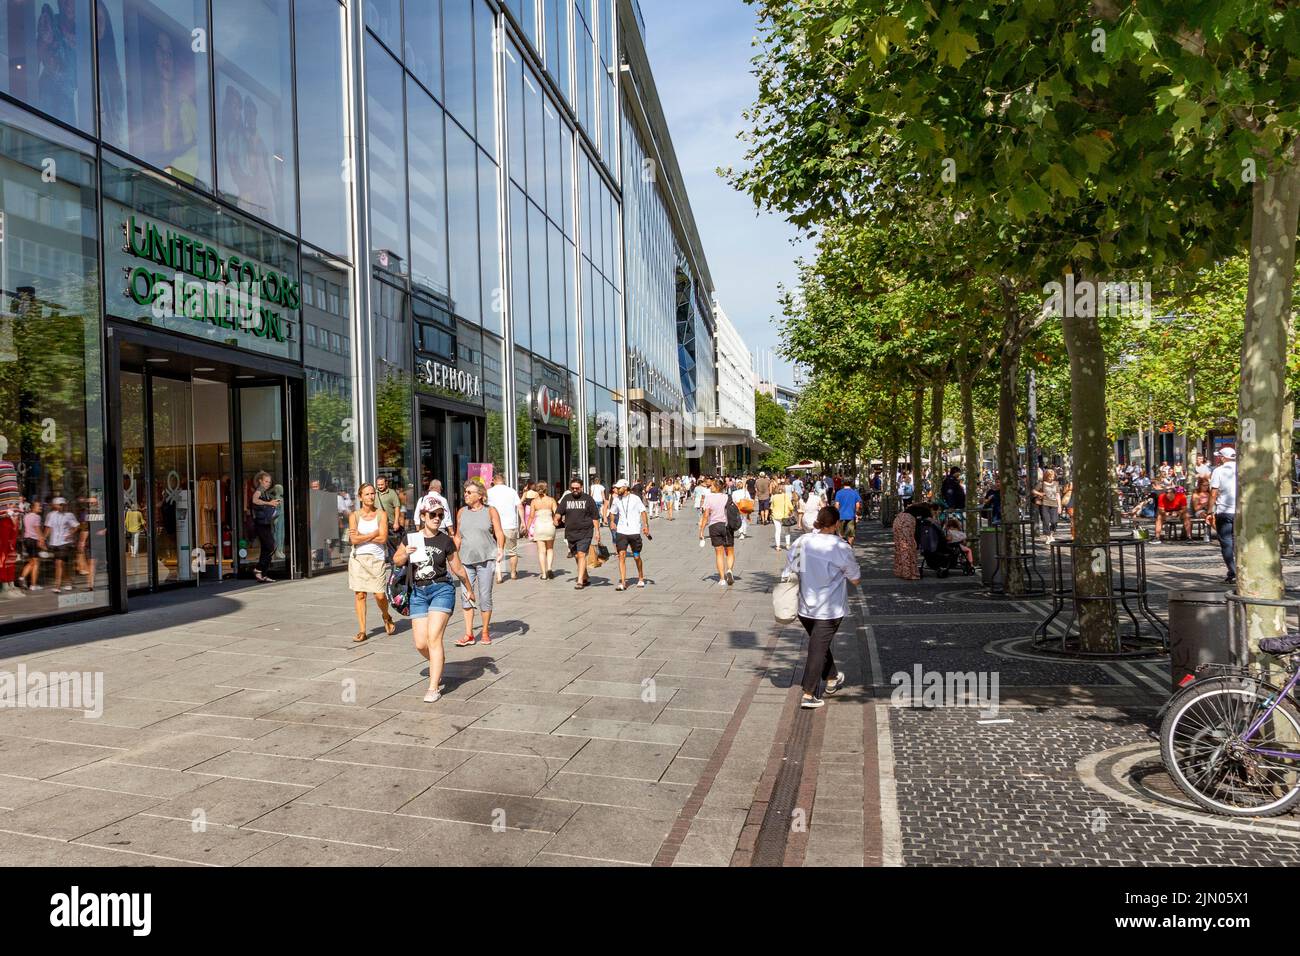 Frankfurt, Germany - August 2, 2022: people enjoy walking along the shopping street Zeil in the pedestrian zone. Stock Photo